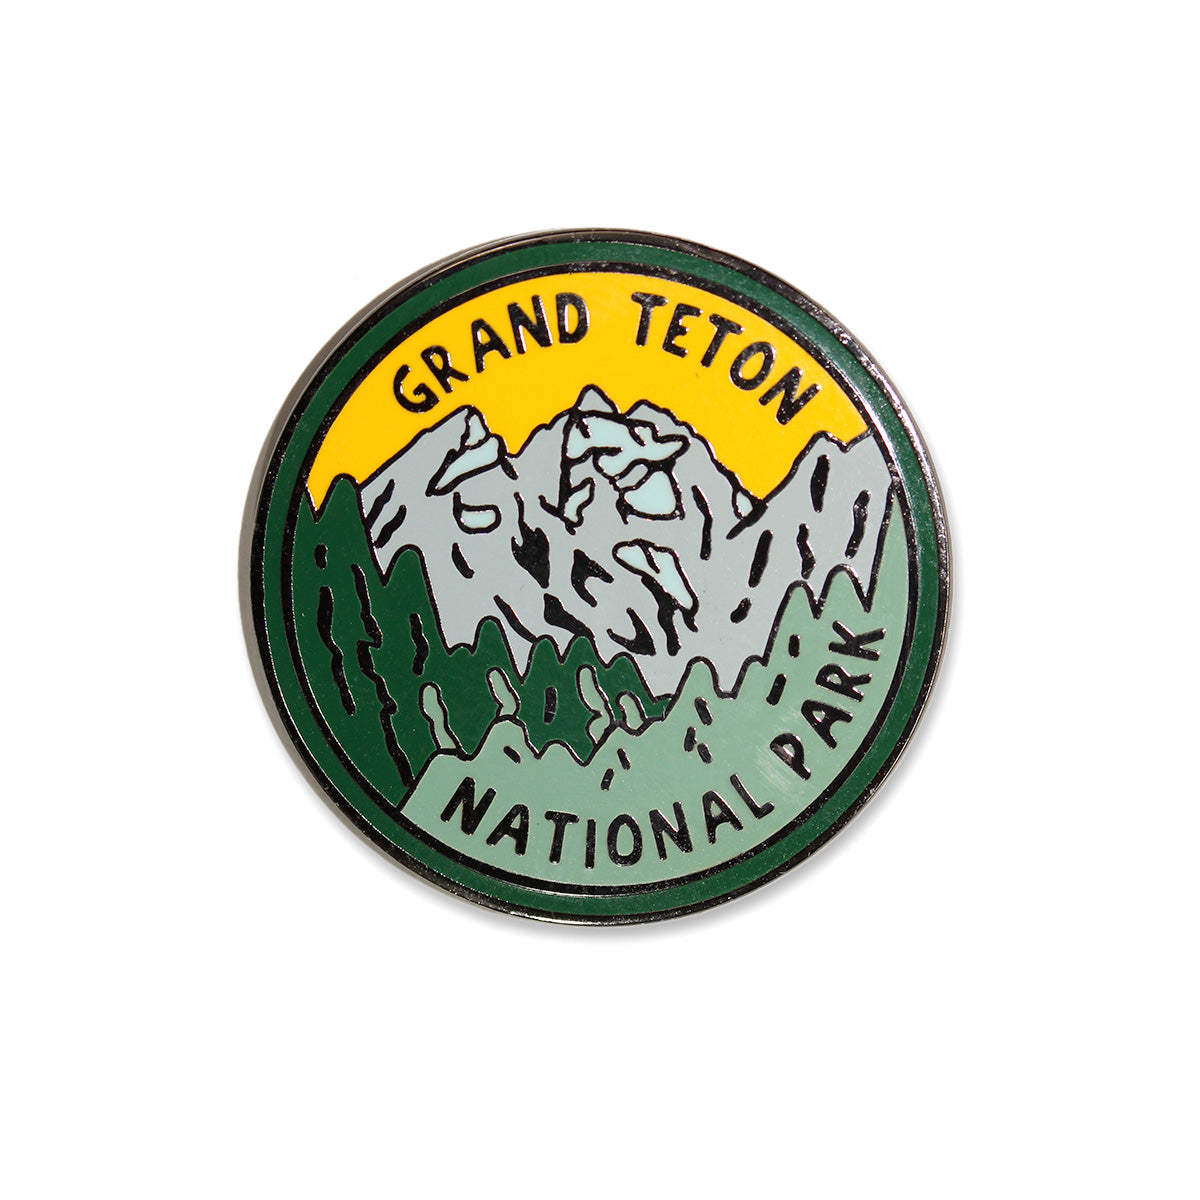 Grand Teton National Park Merit Badge Pin